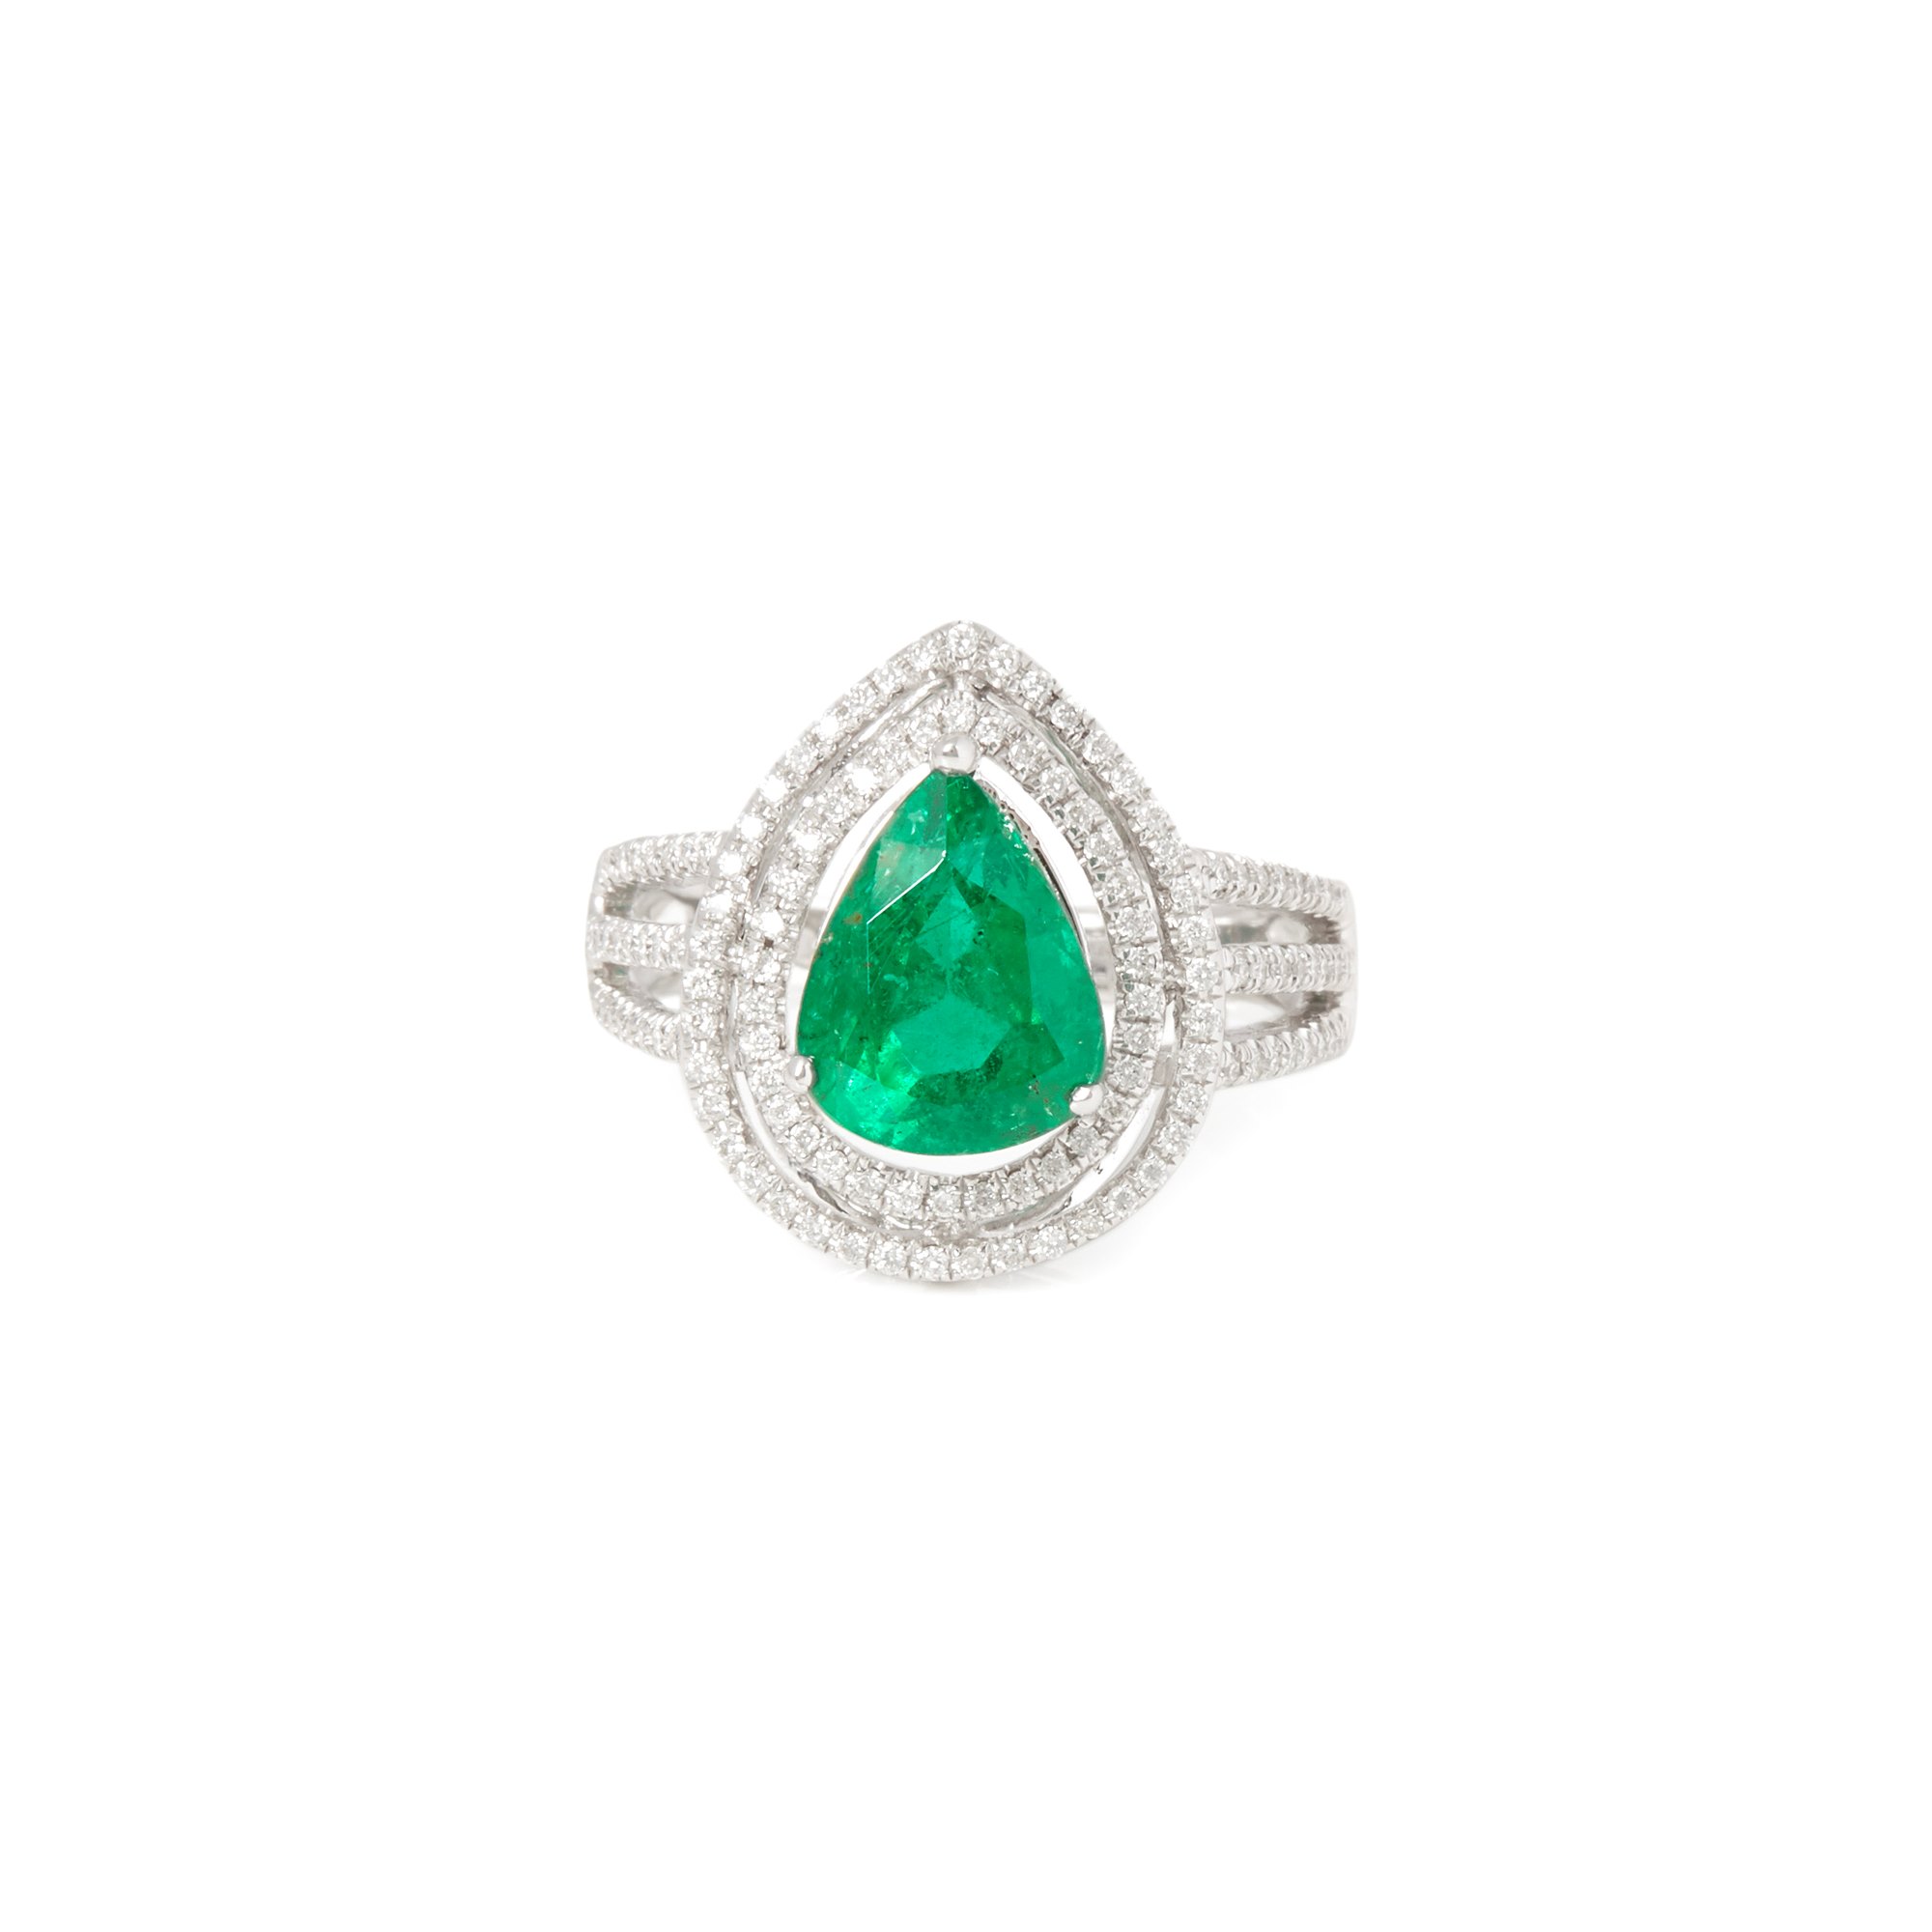 David Jerome Certified 3.68ct Untreated Zambian Pear Cut Emerald and Diamond 18ct Gold Ring